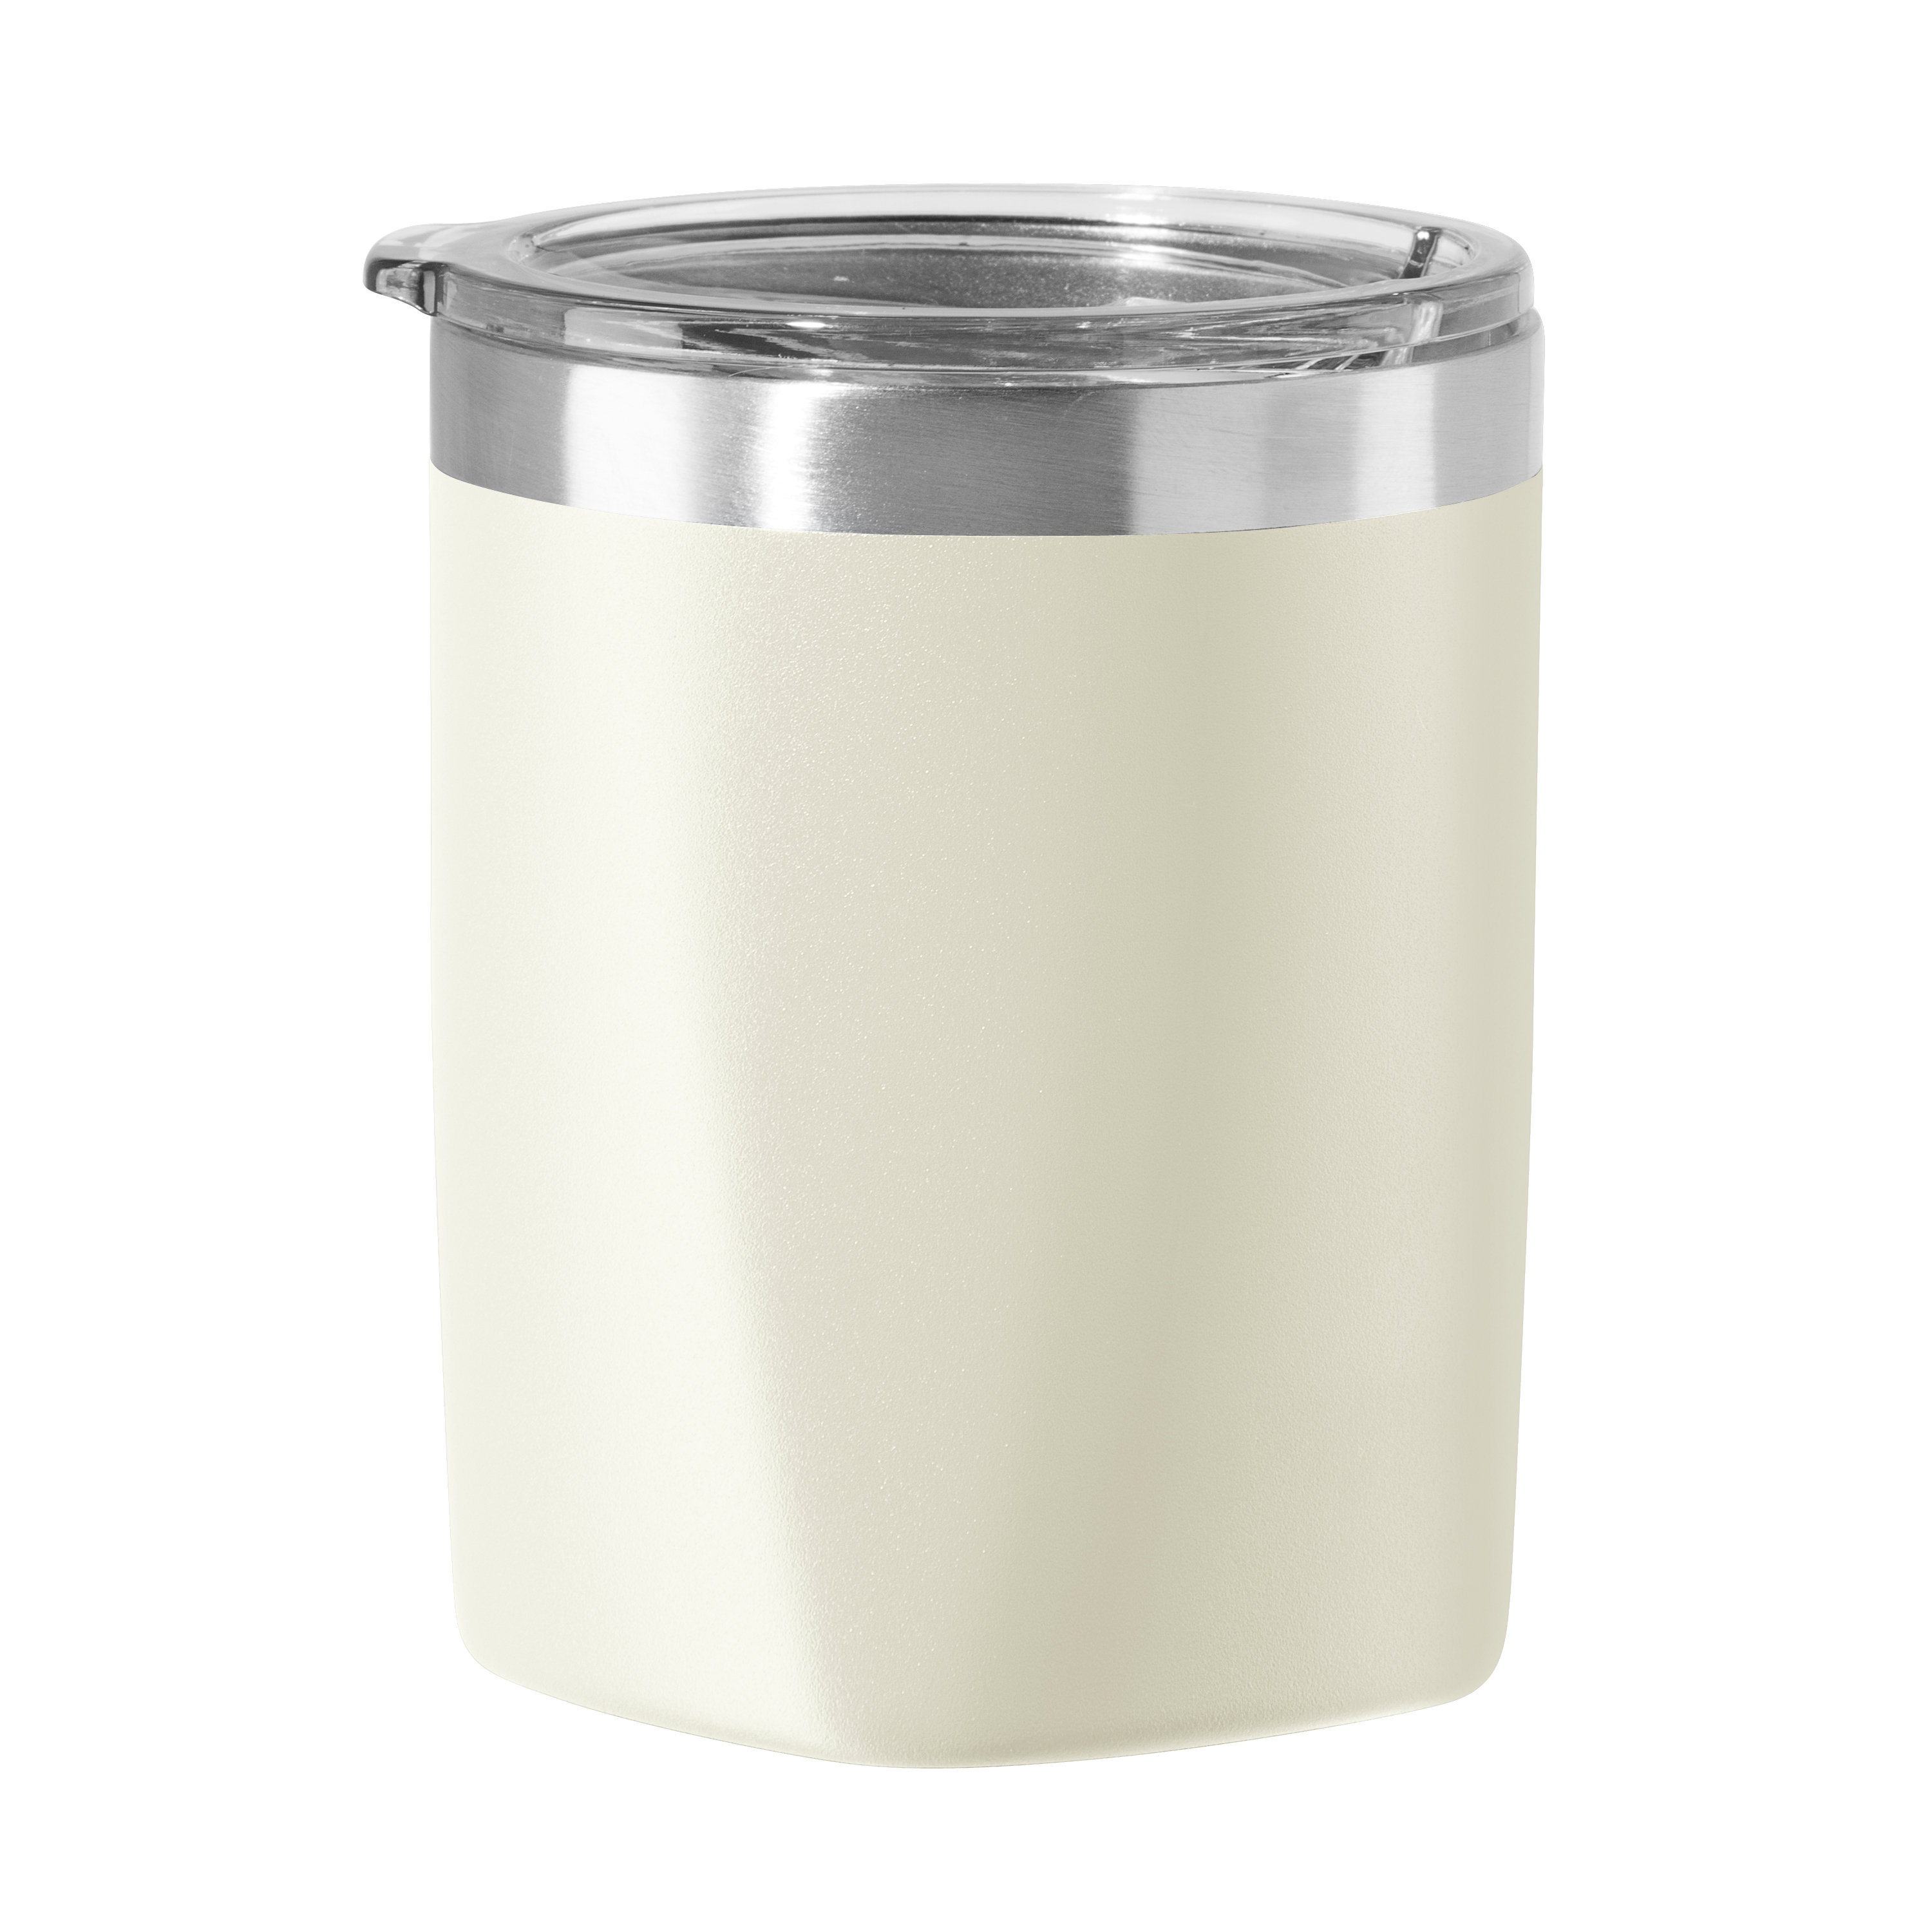  YETI Rambler 20 oz Cocktail Shaker, Stainless Steel, Vacuum  Insulated, White: Home & Kitchen